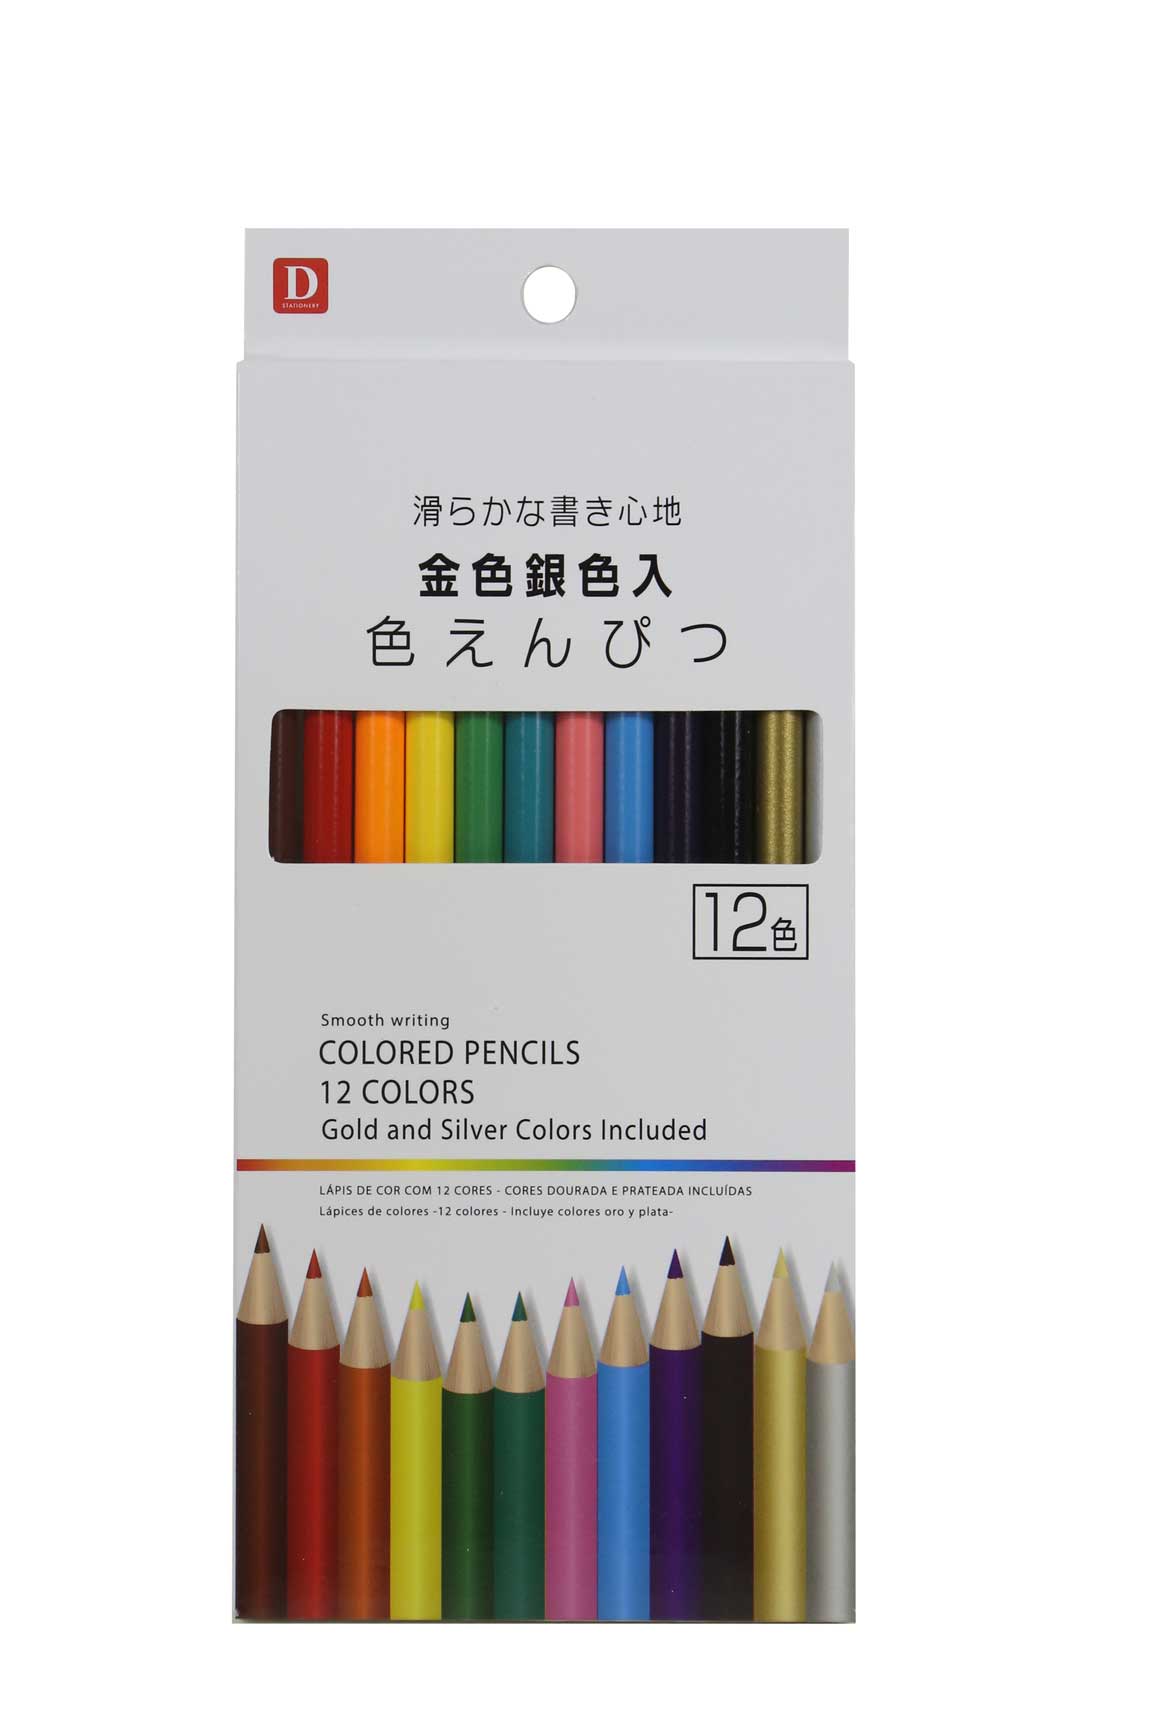 Mocchiri Brown Bear Pencil Case - Daiso Japan Middle East